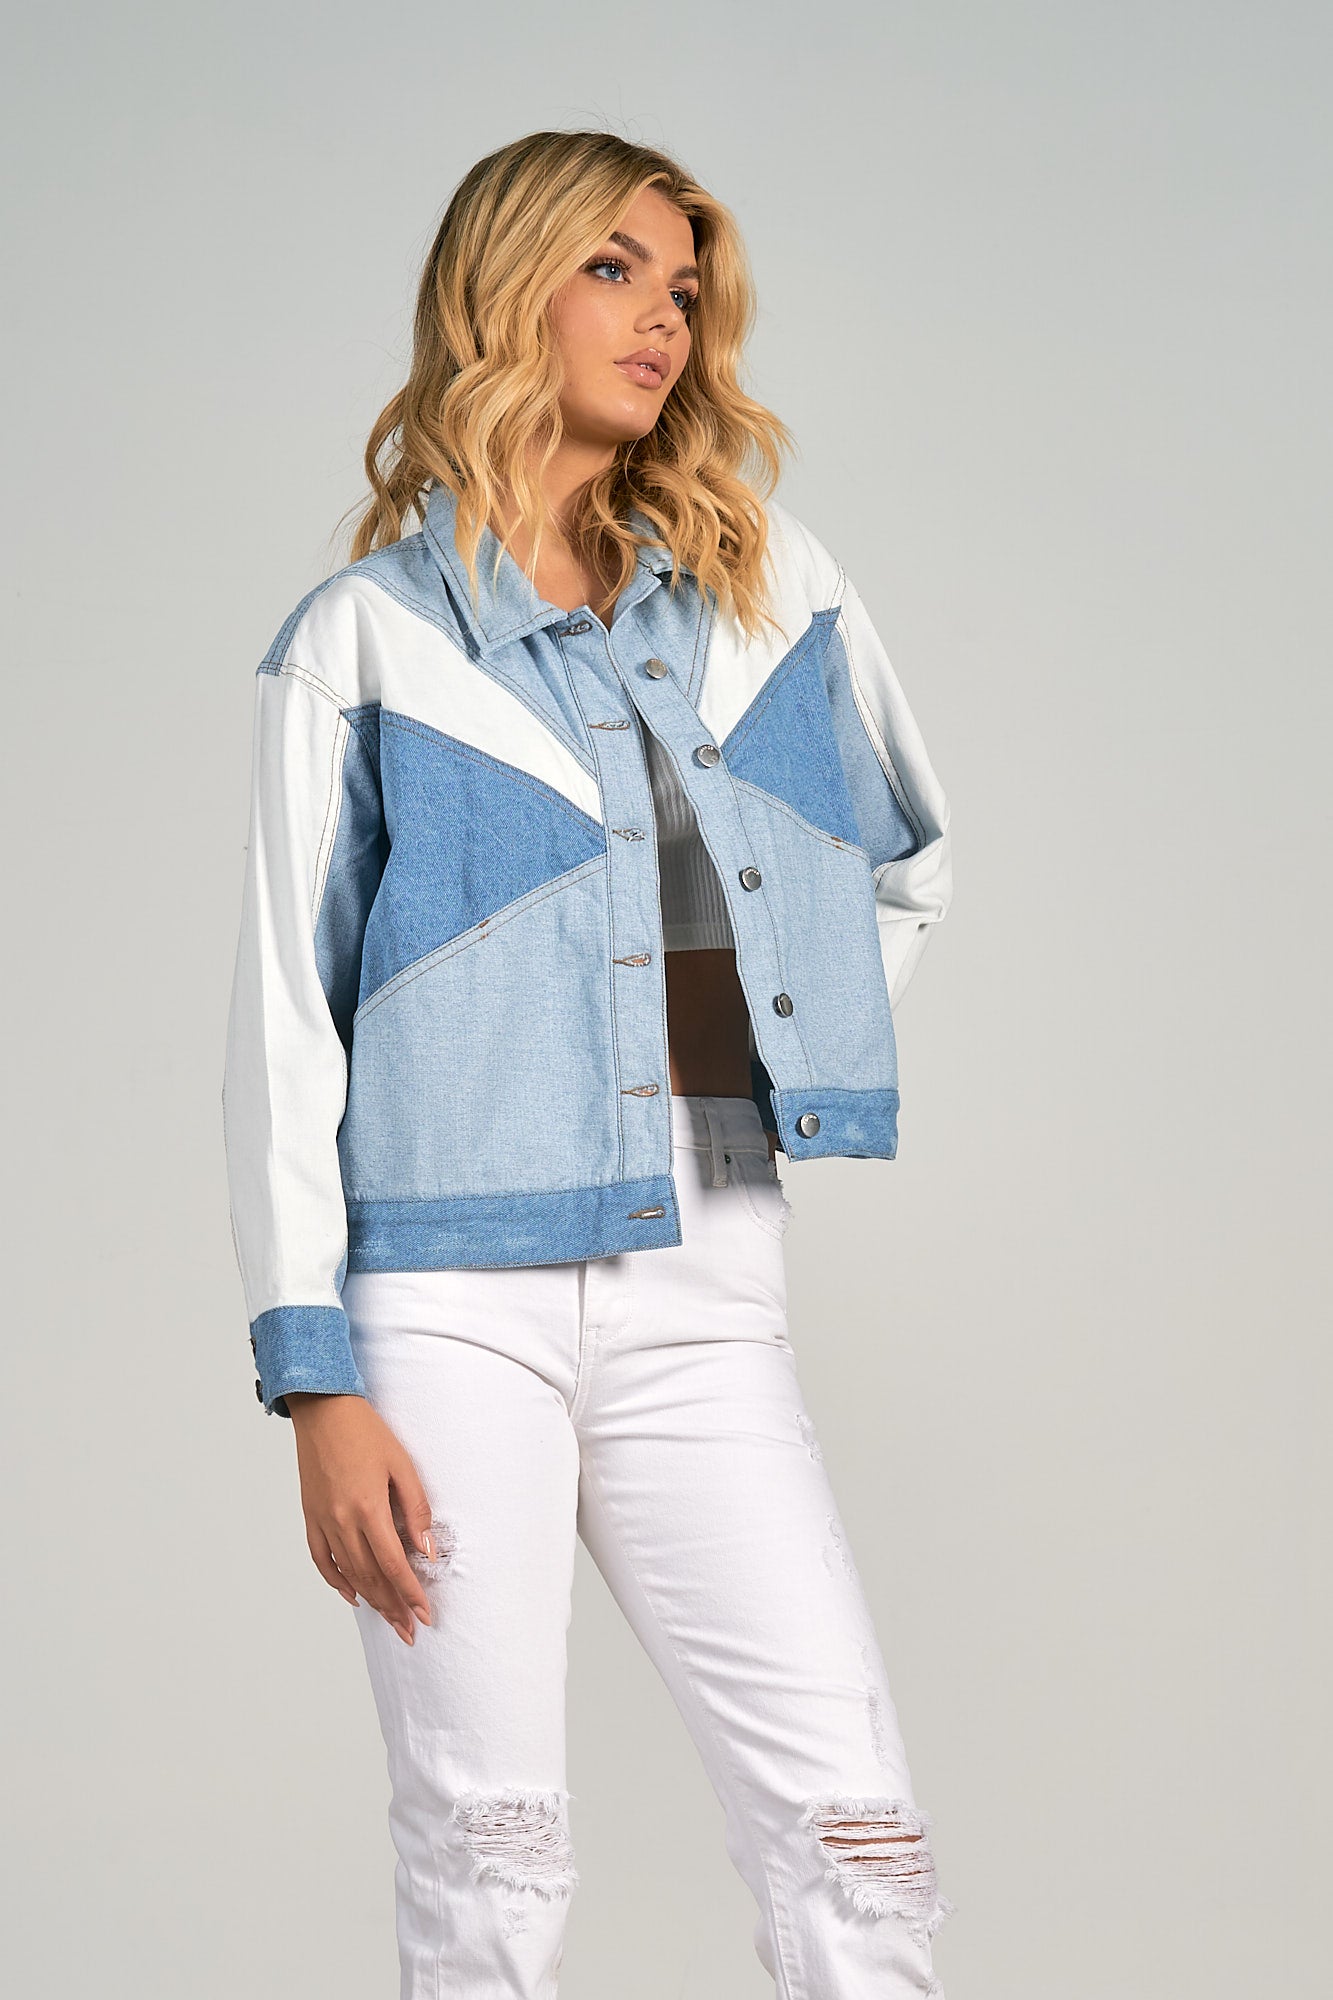 SLAY. Women's Pink & White Colorblock Denim Jacket & Jeans Co-ord Set